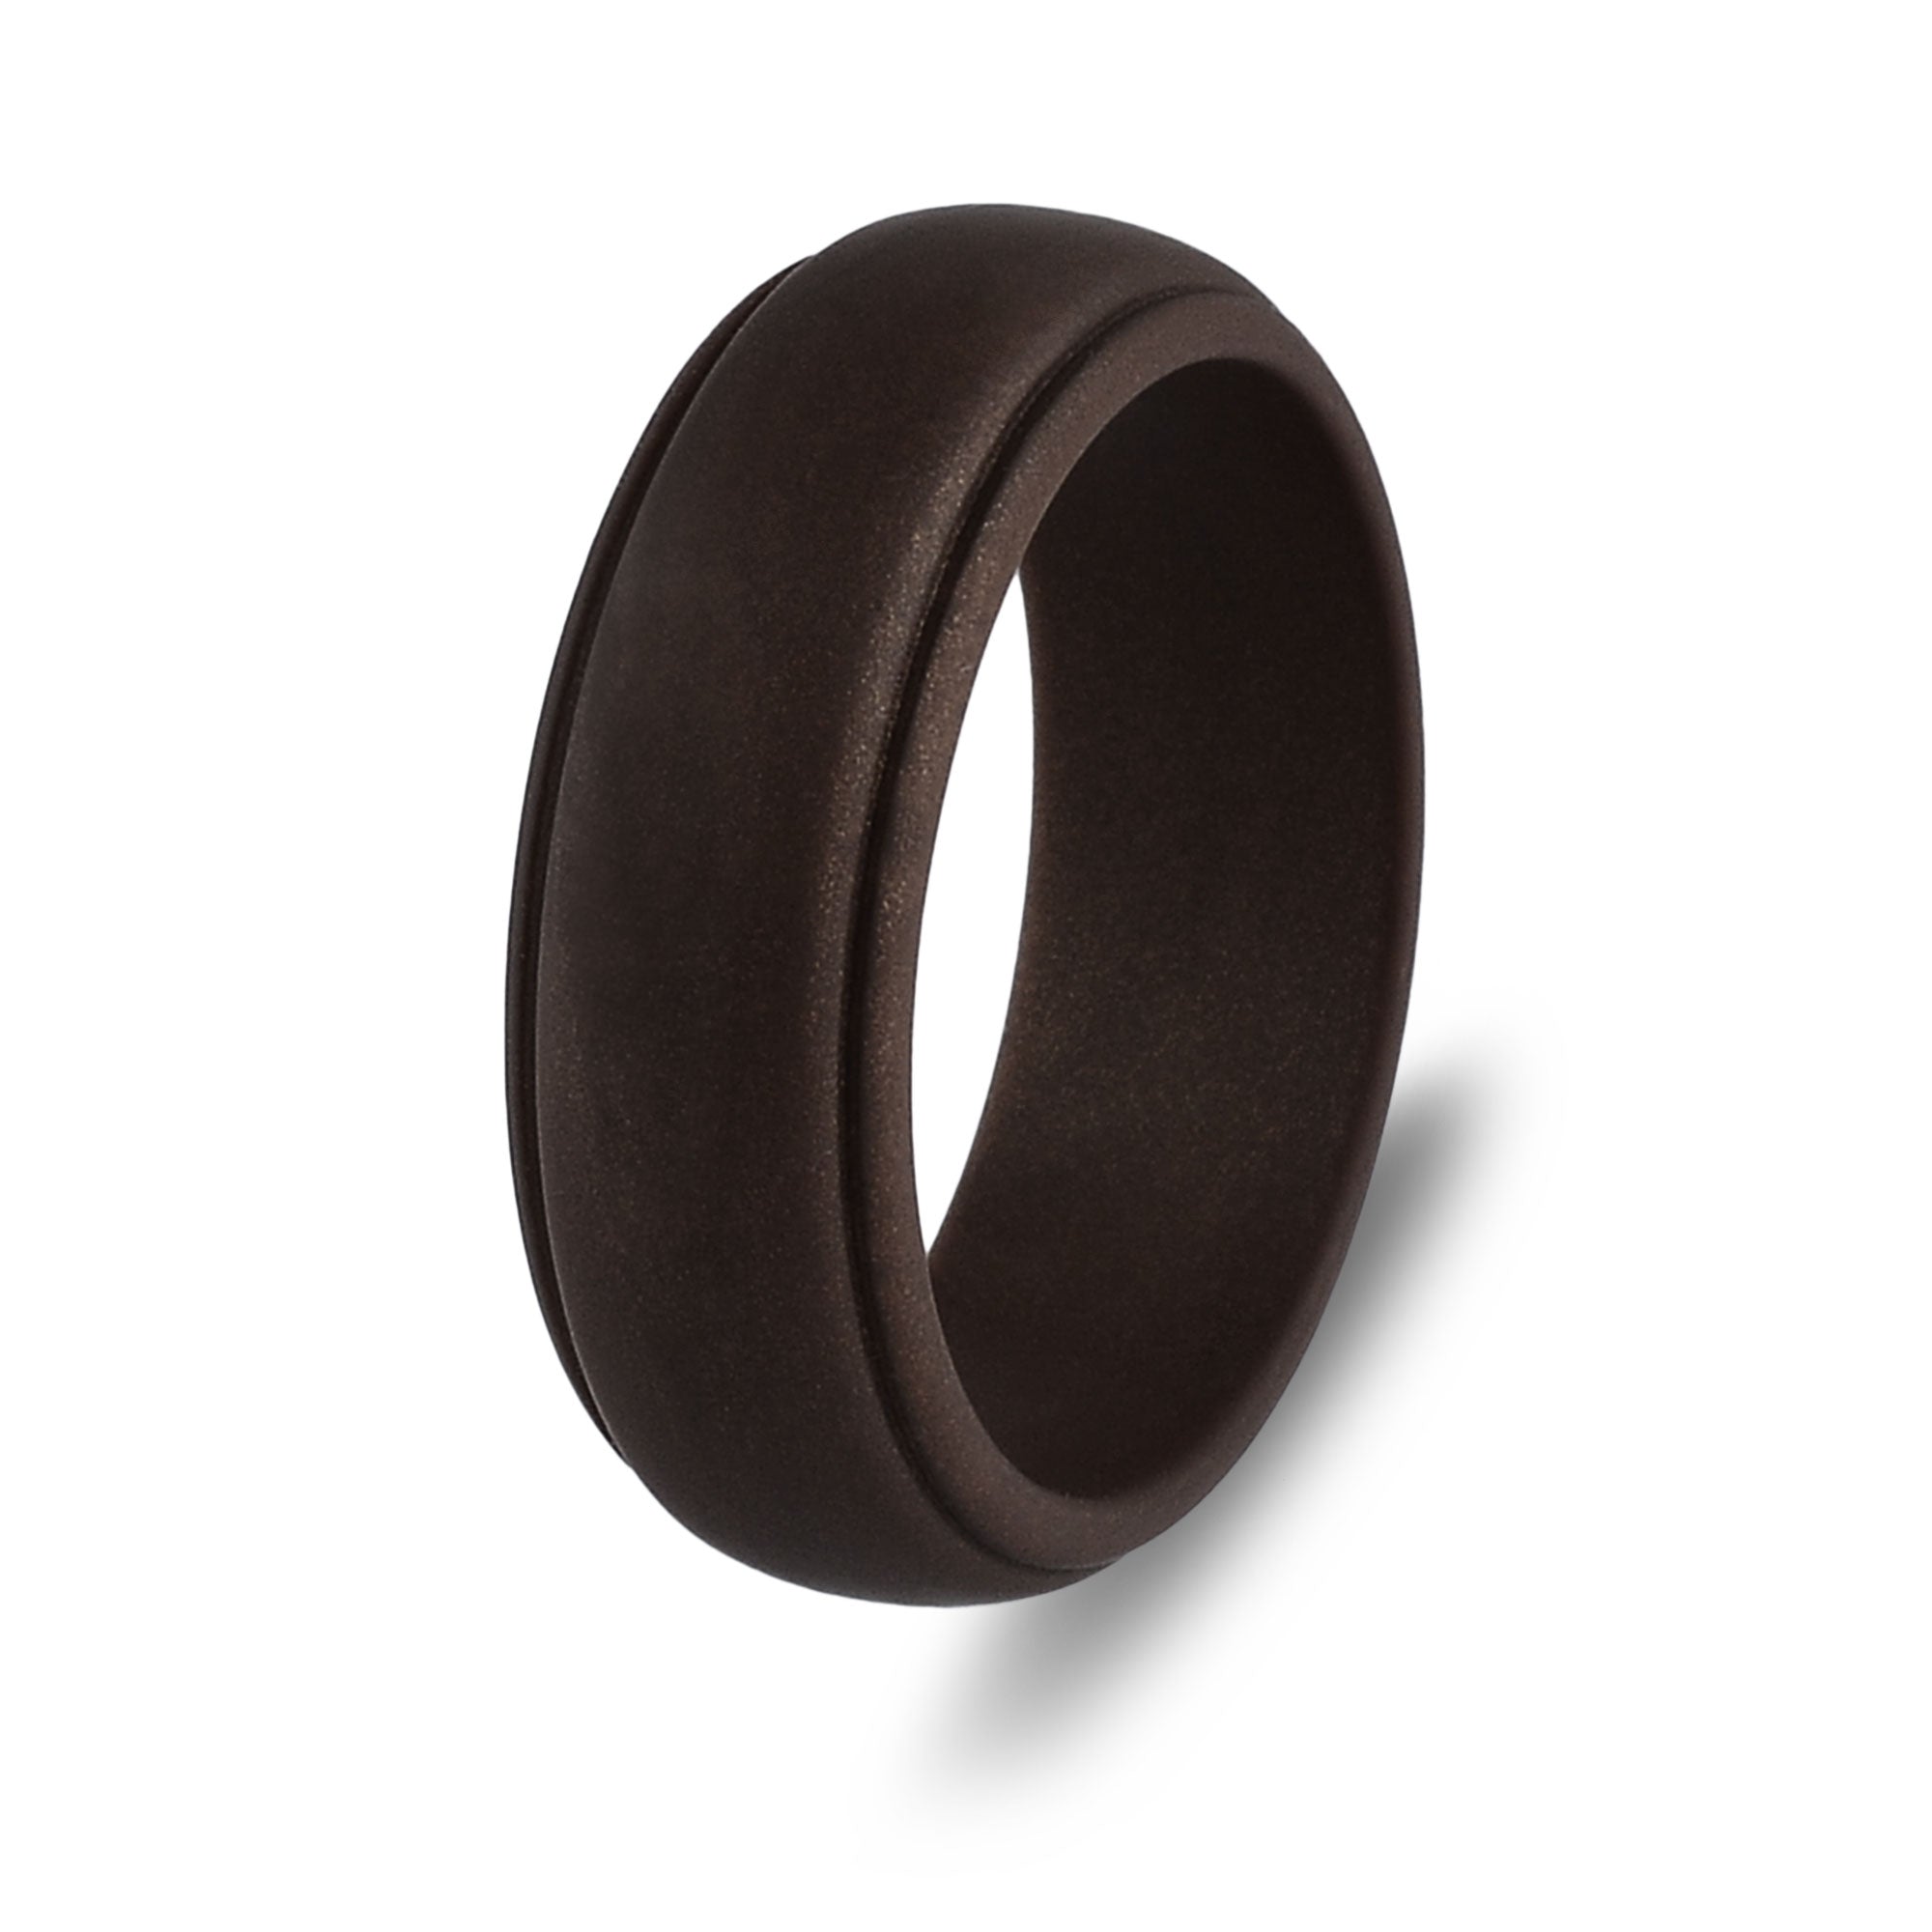 The Cocoa - Silicone Ring